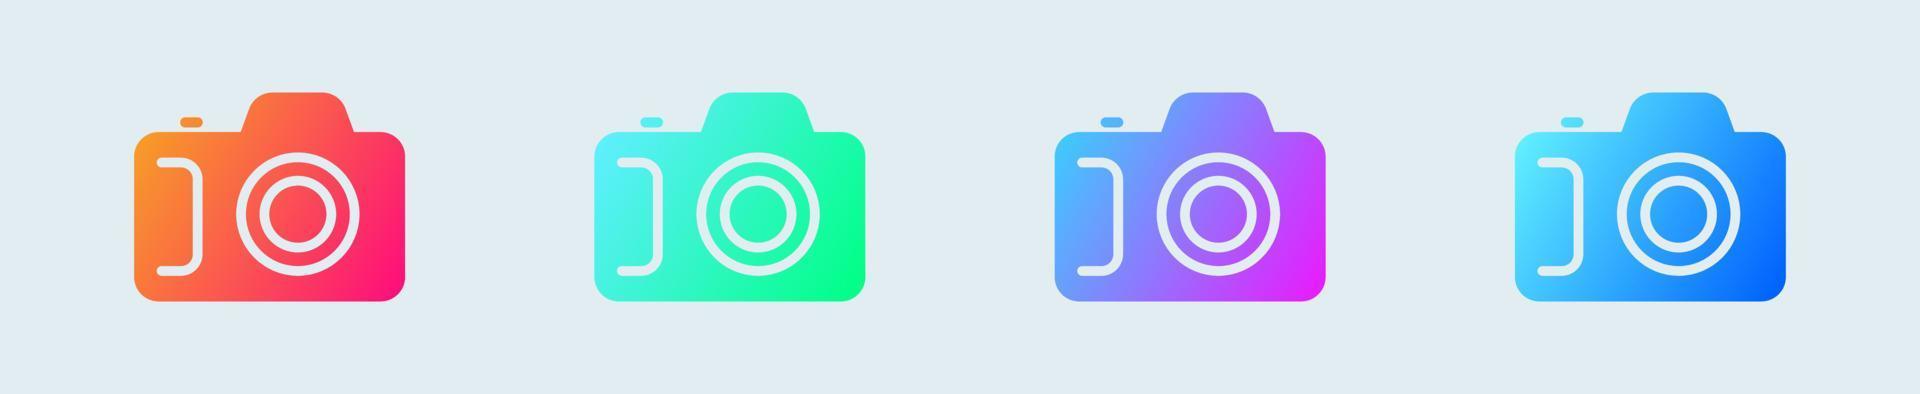 Camera solid icon in gradient colors. Foto signs vector illustration.